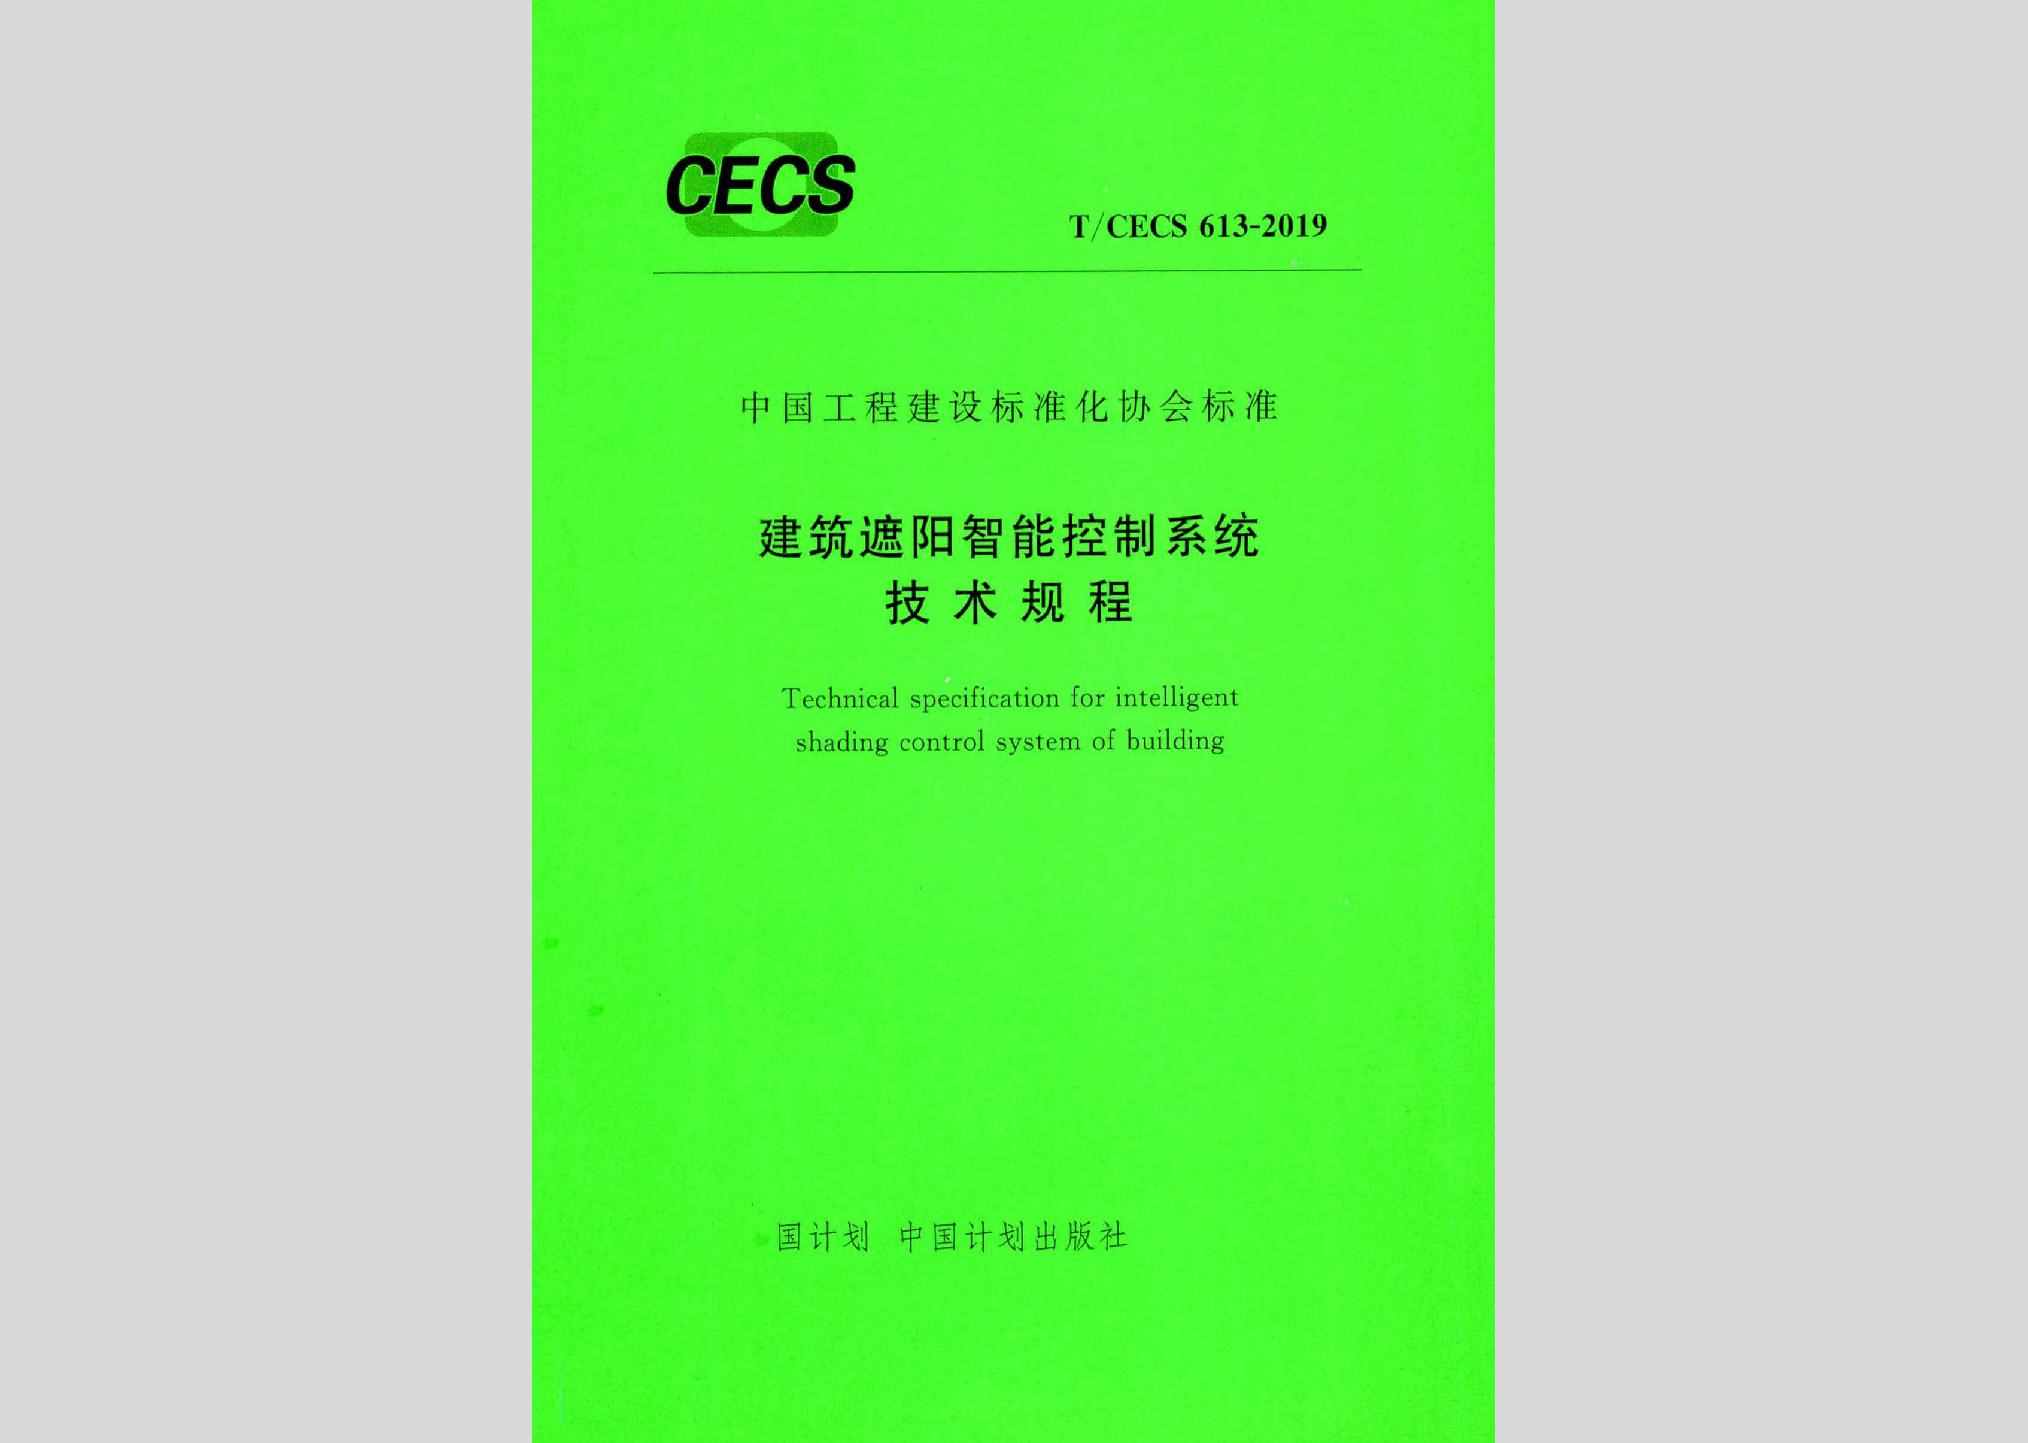 T/CECS613-2019：建筑遮阳智能控制系统技术规程